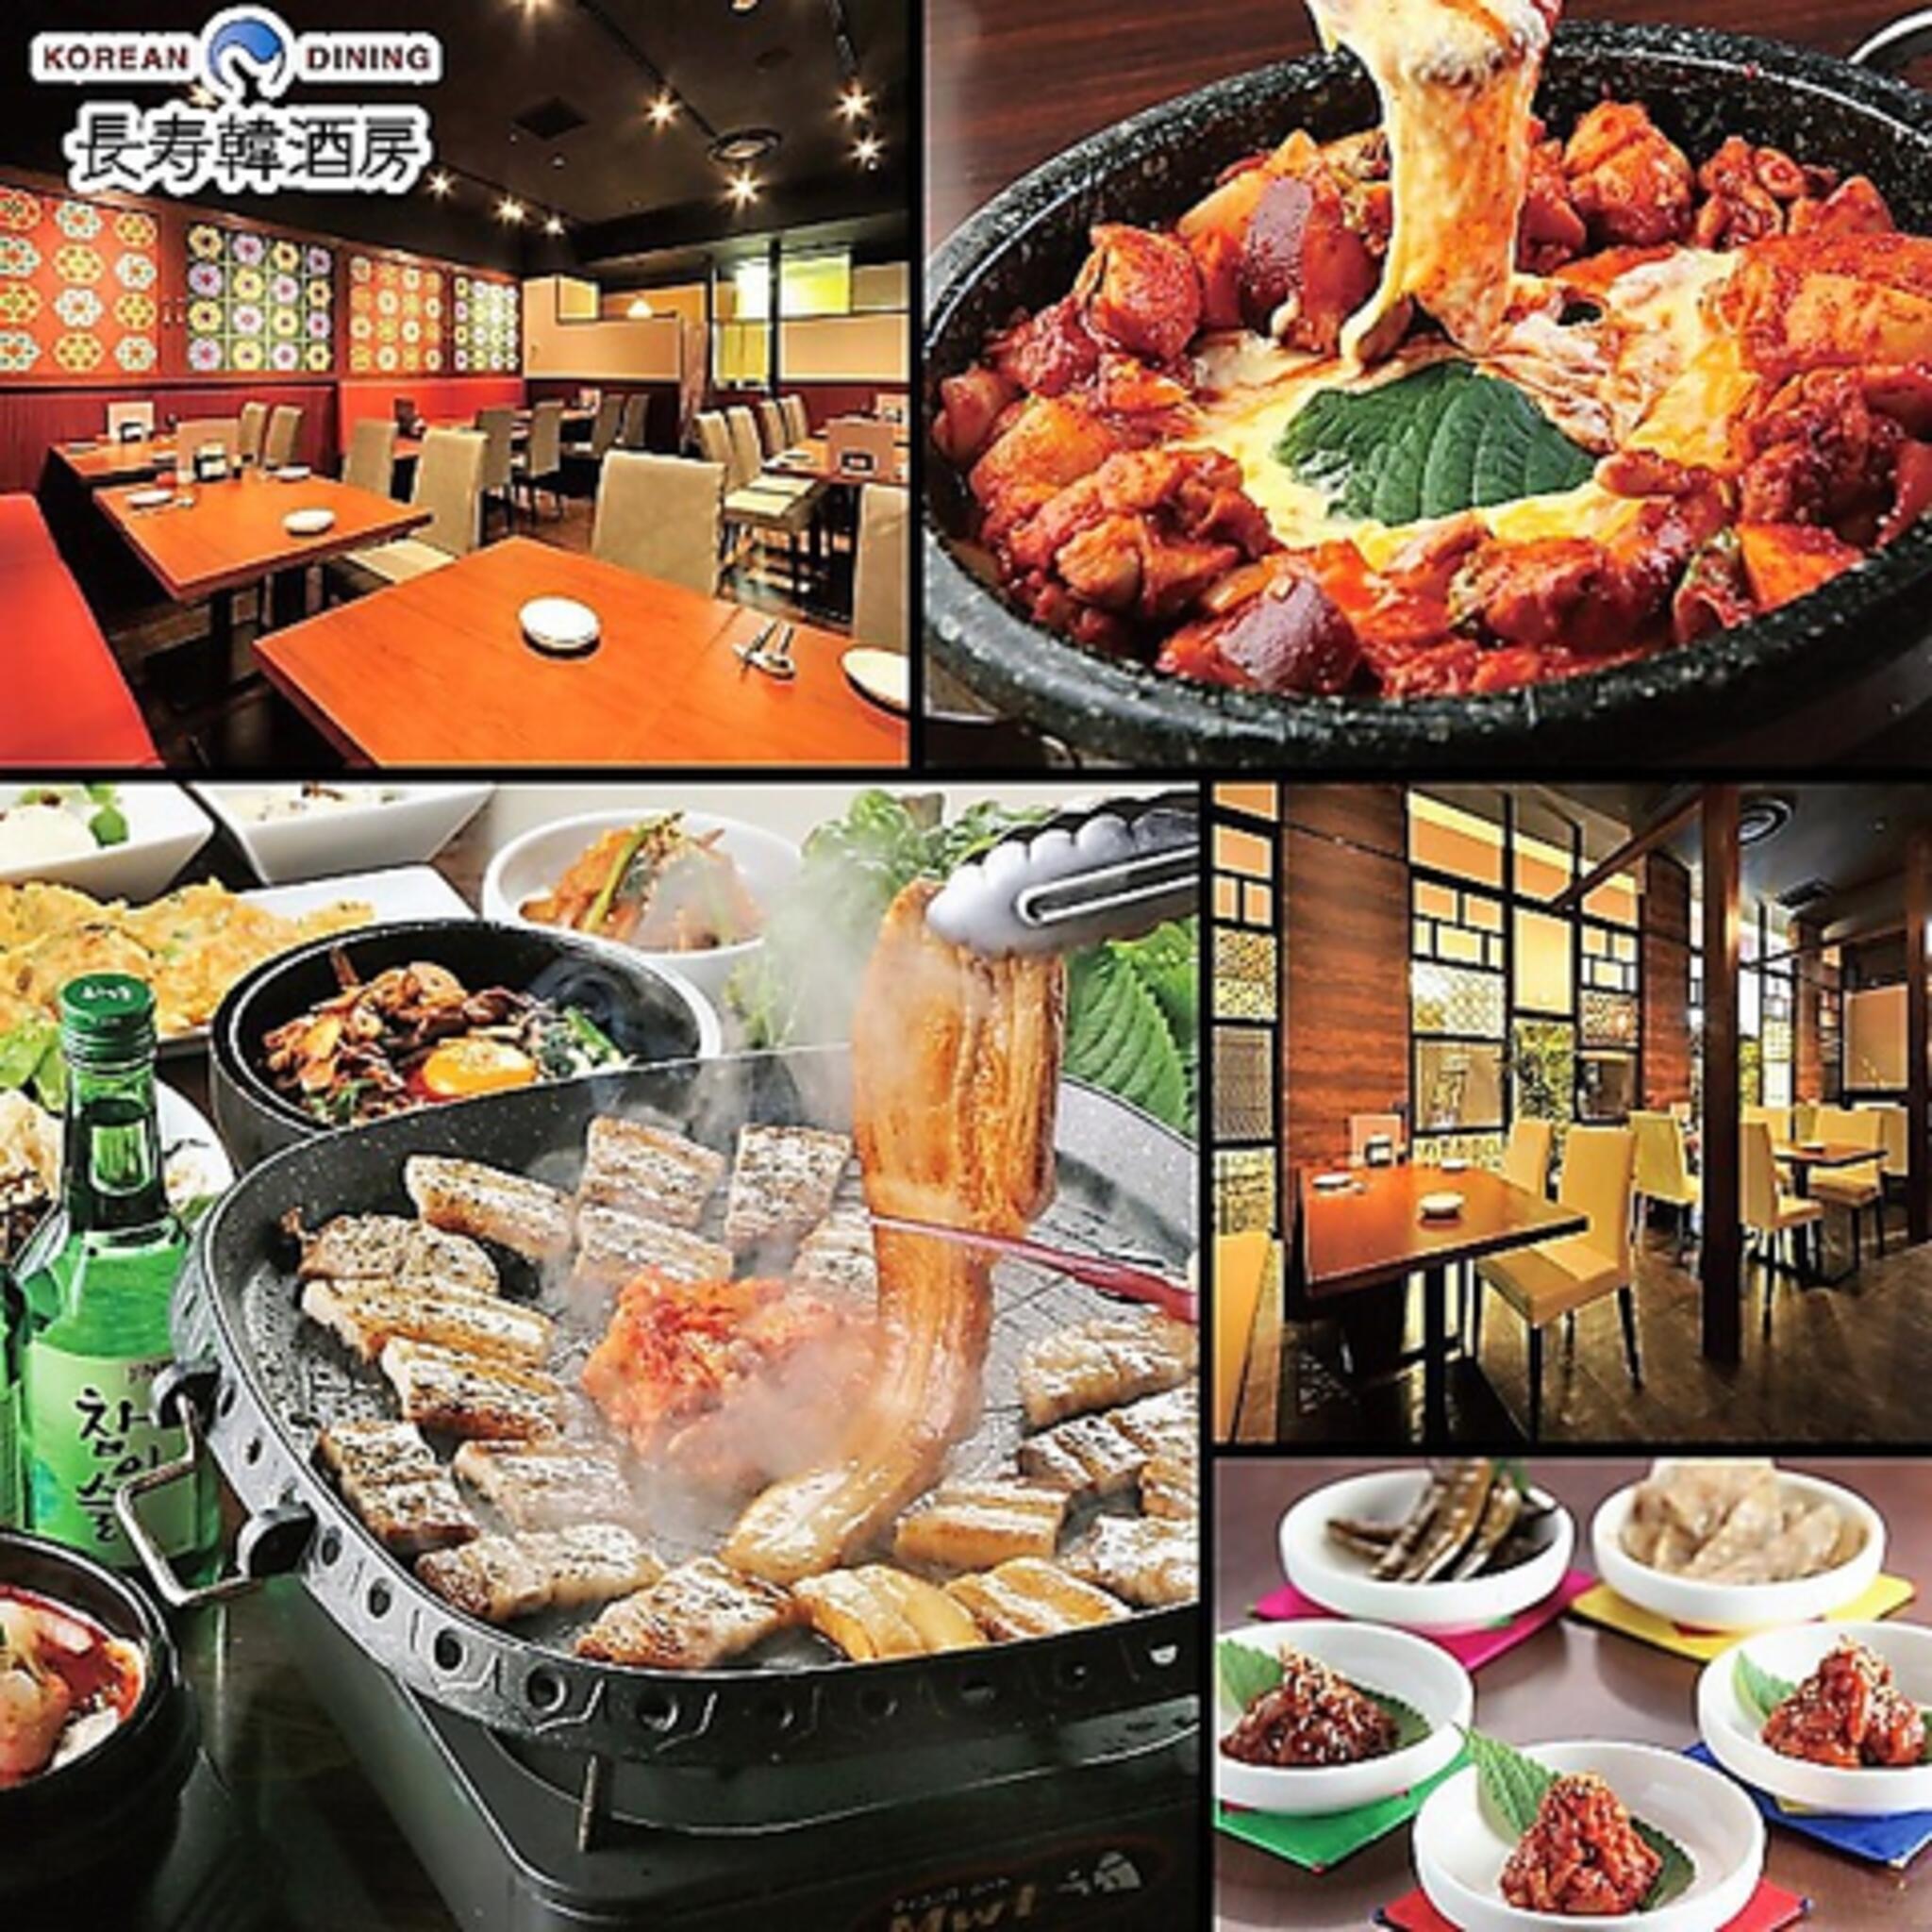 KOREAN DINING 長寿韓酒房 有明店の代表写真2